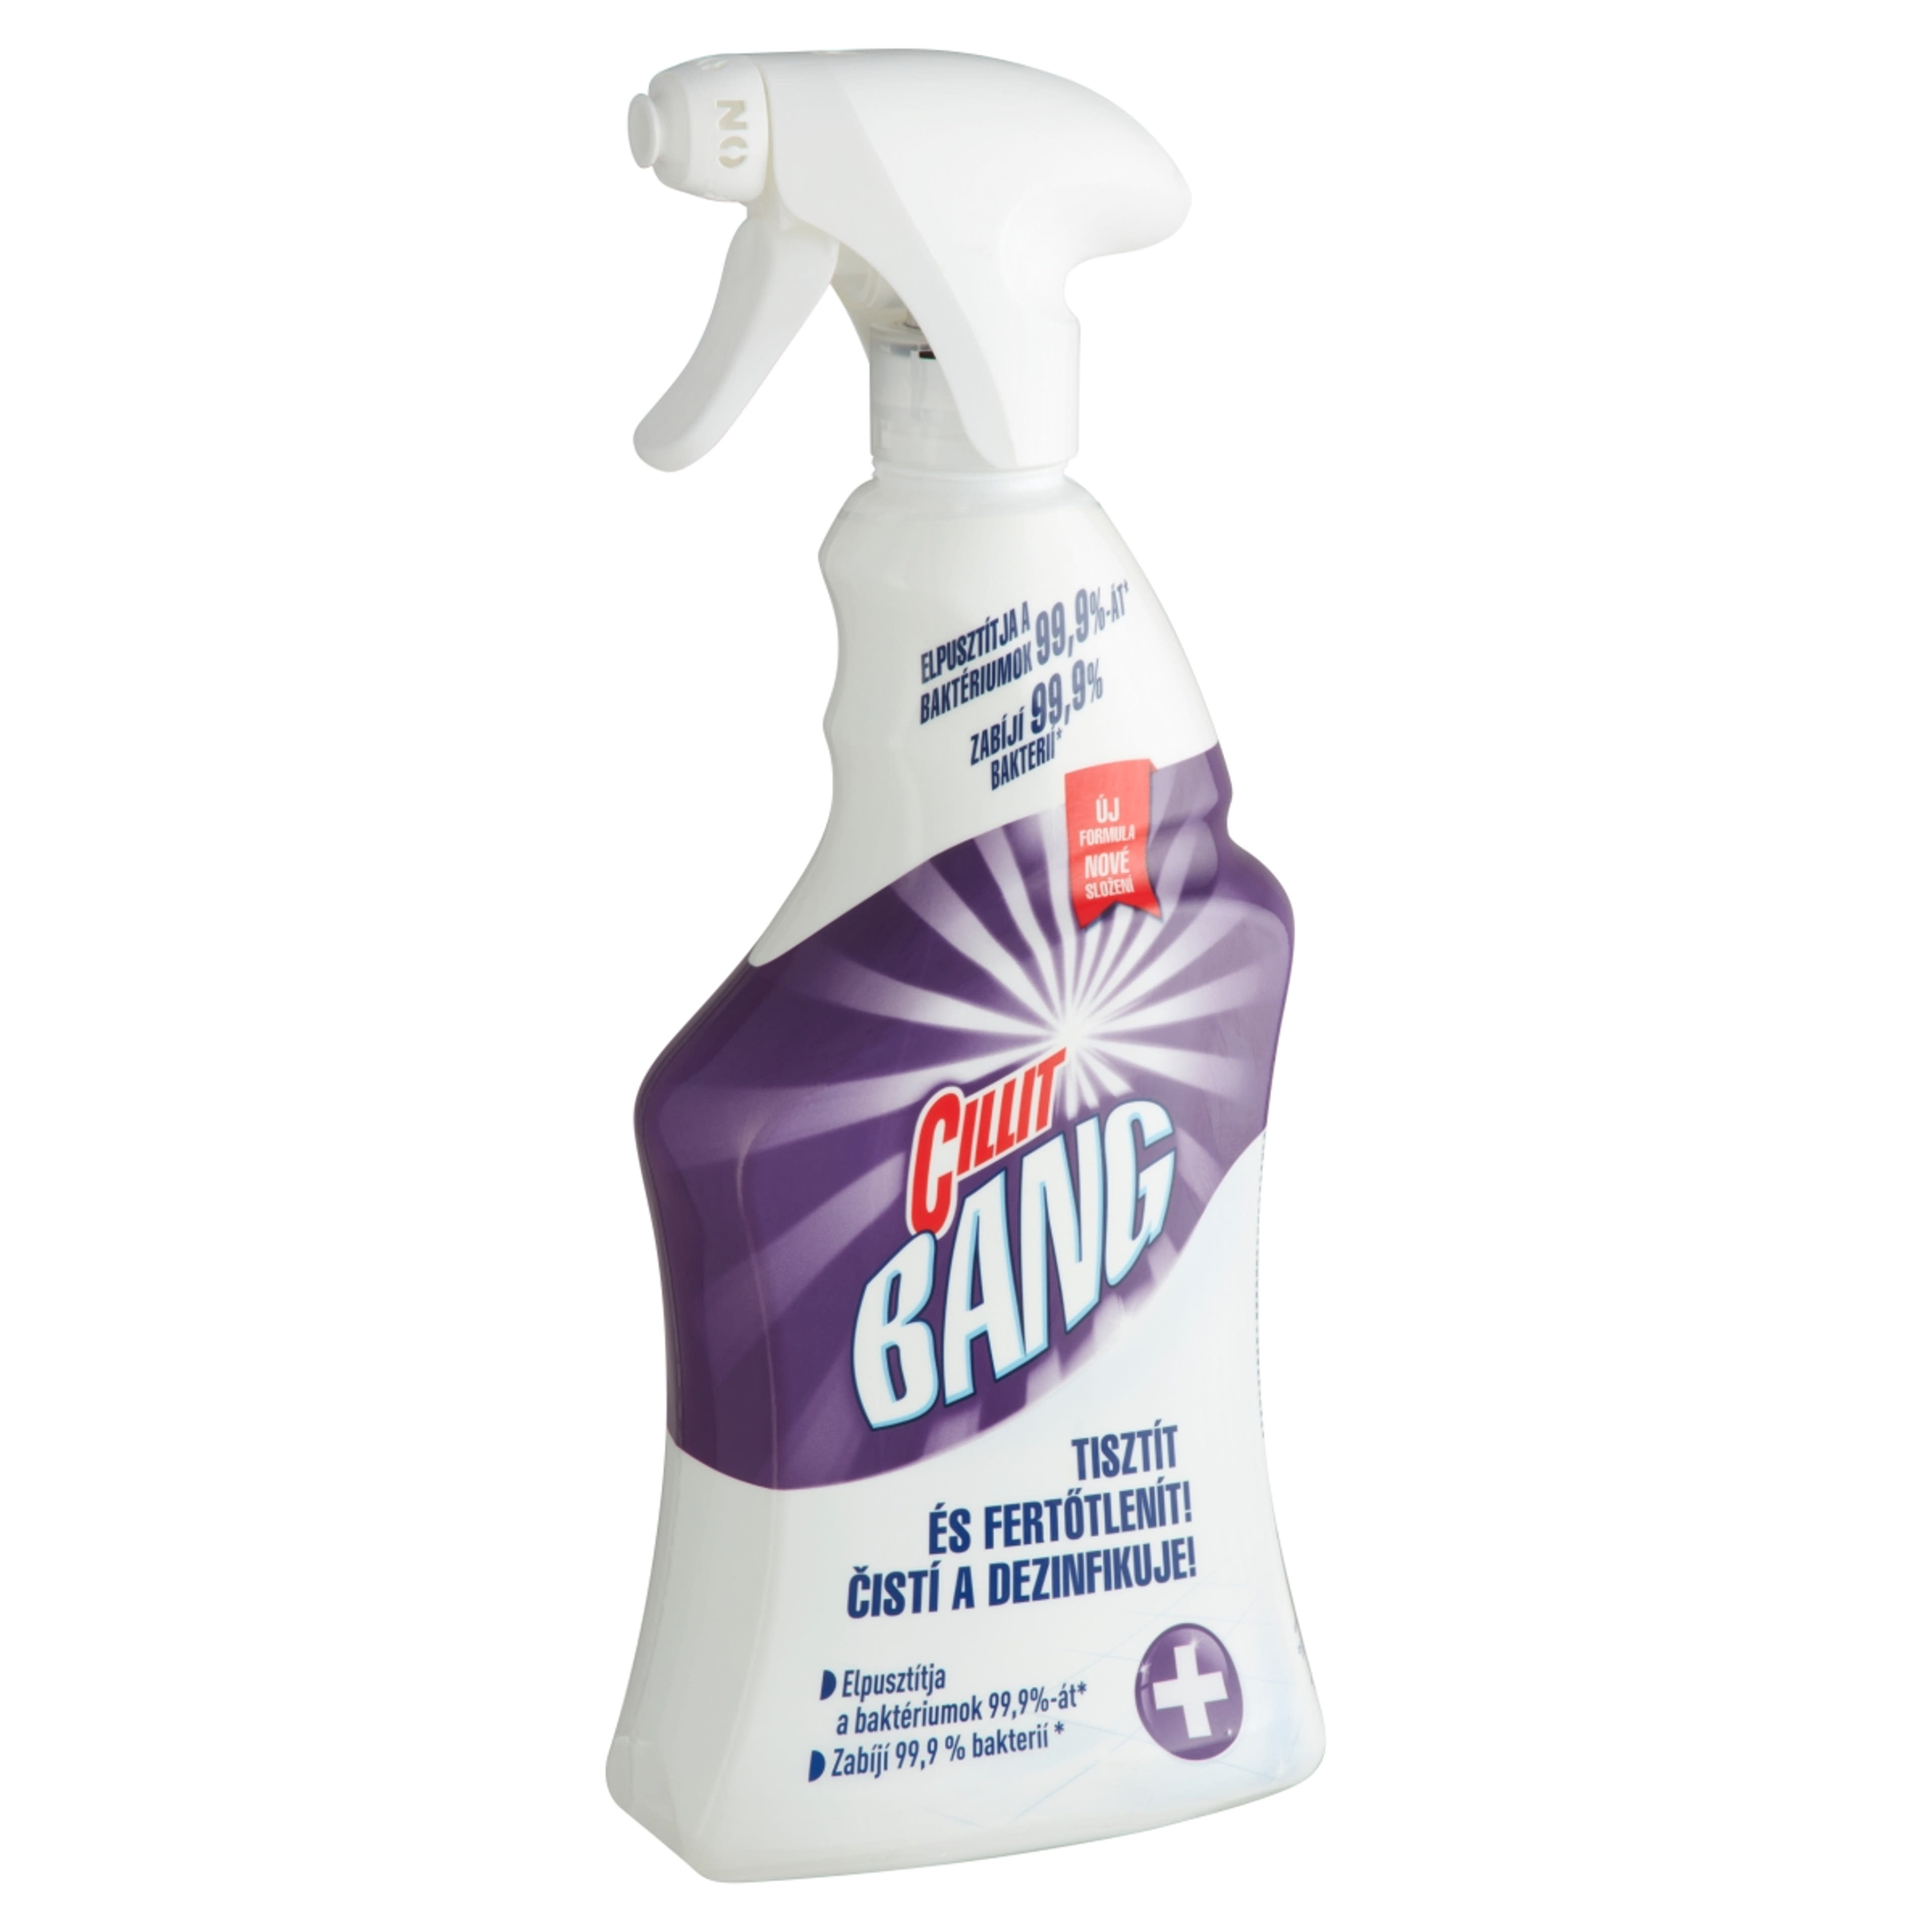 Cillit Bang Power Cleaner Foltmentes Tisztaság Spray - 750 ml-2